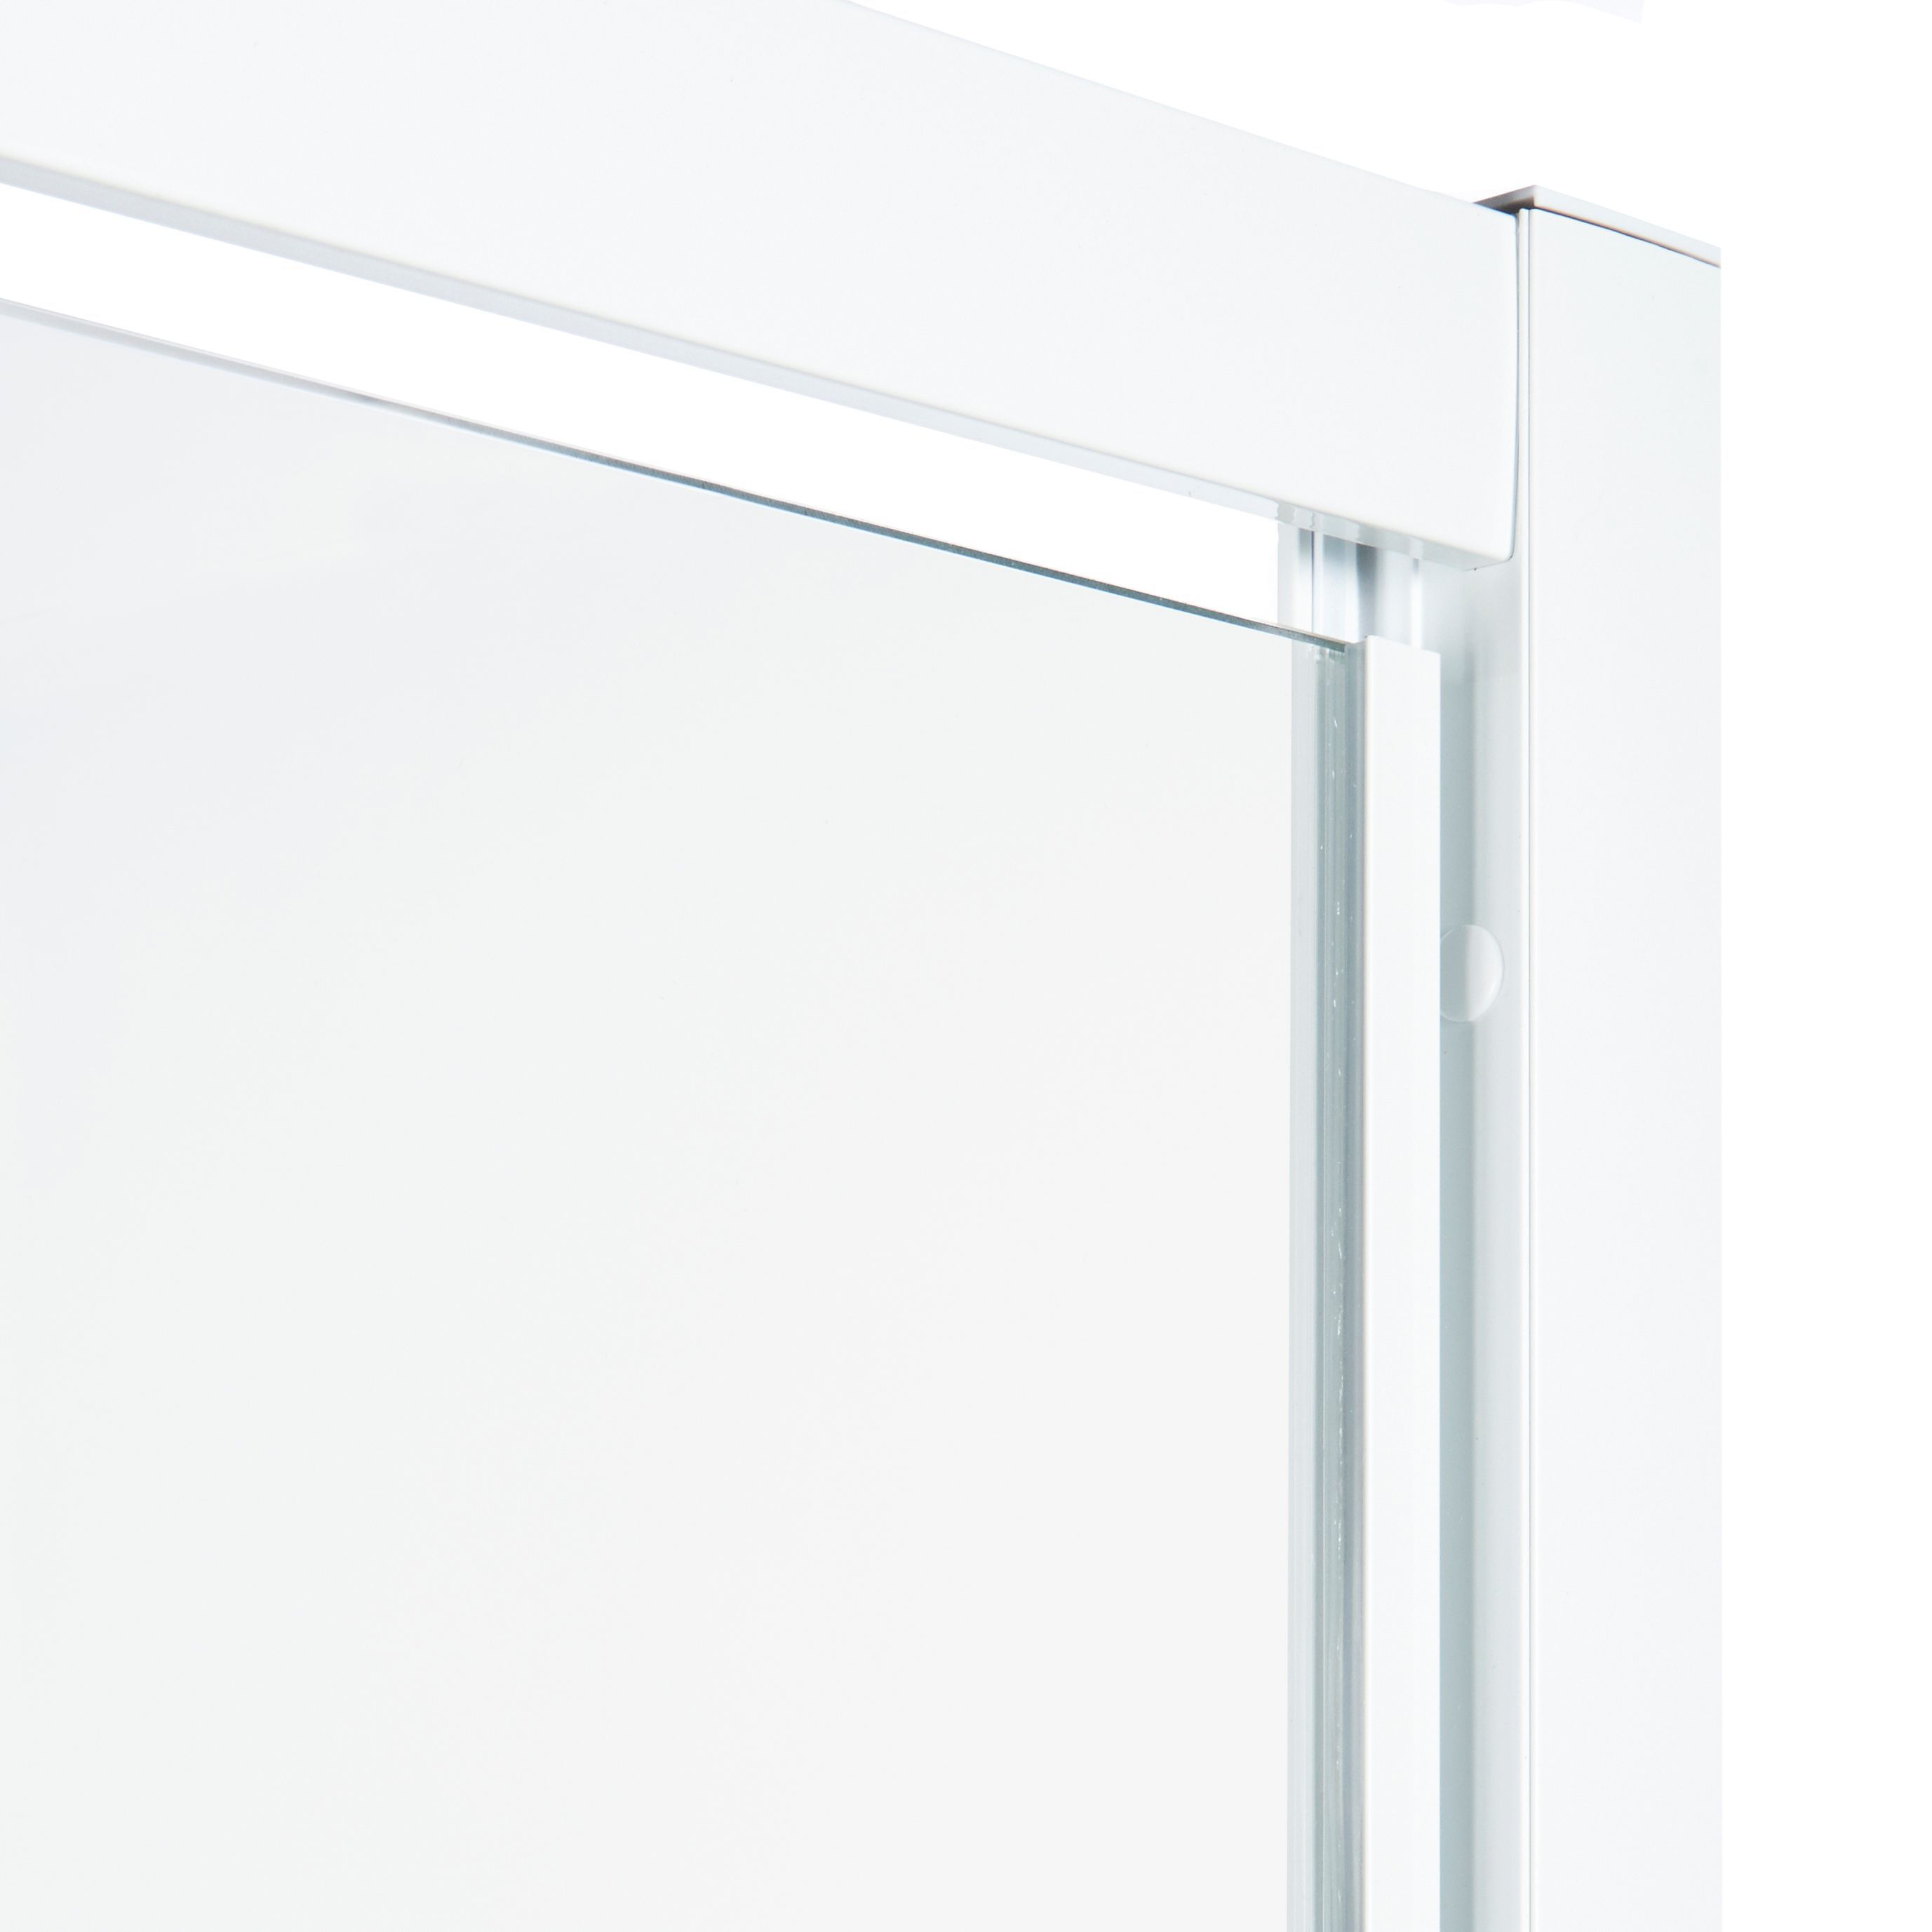 Cooke & Lewis Onega Blanc Frosted Strip Full open pivot Shower Door (H)190cm (W)80cm